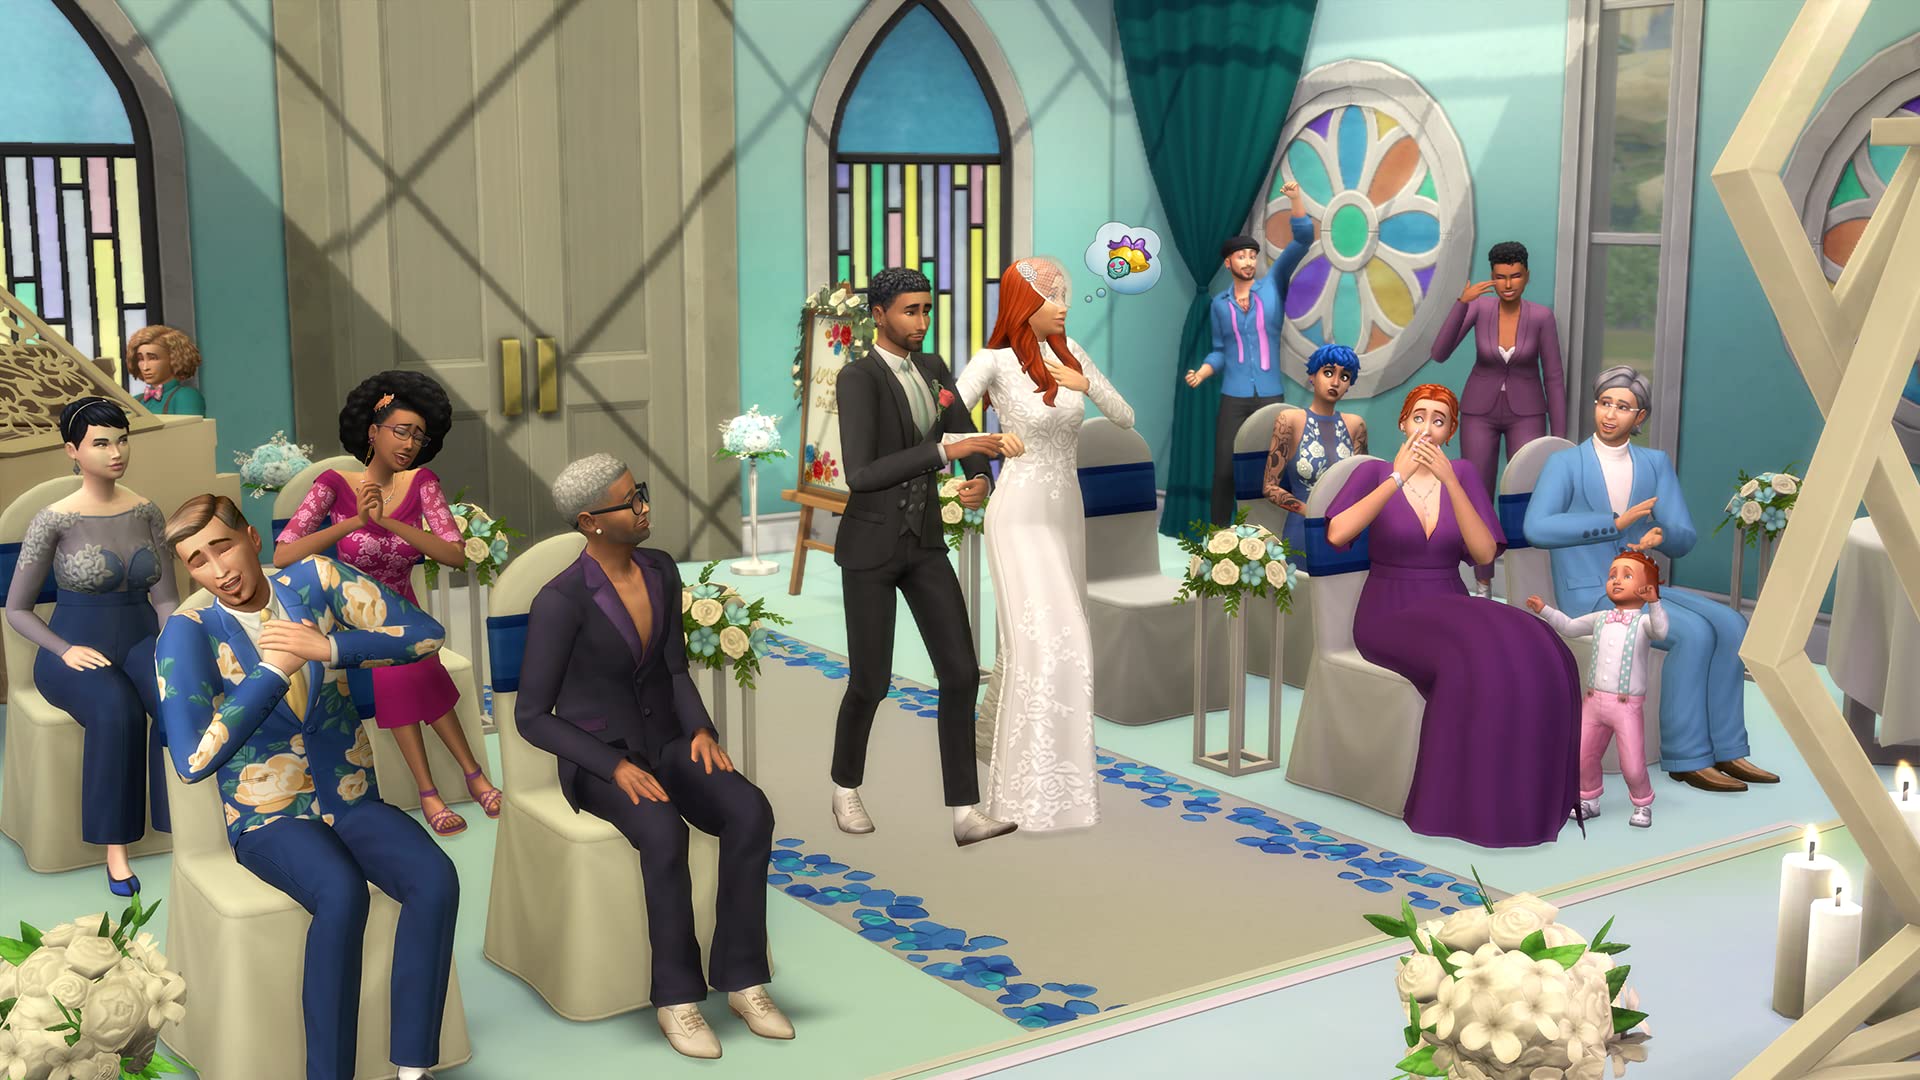 The Sims 4 - My Wedding Stories Wedding Stories - Origin PC [Online Game Code]